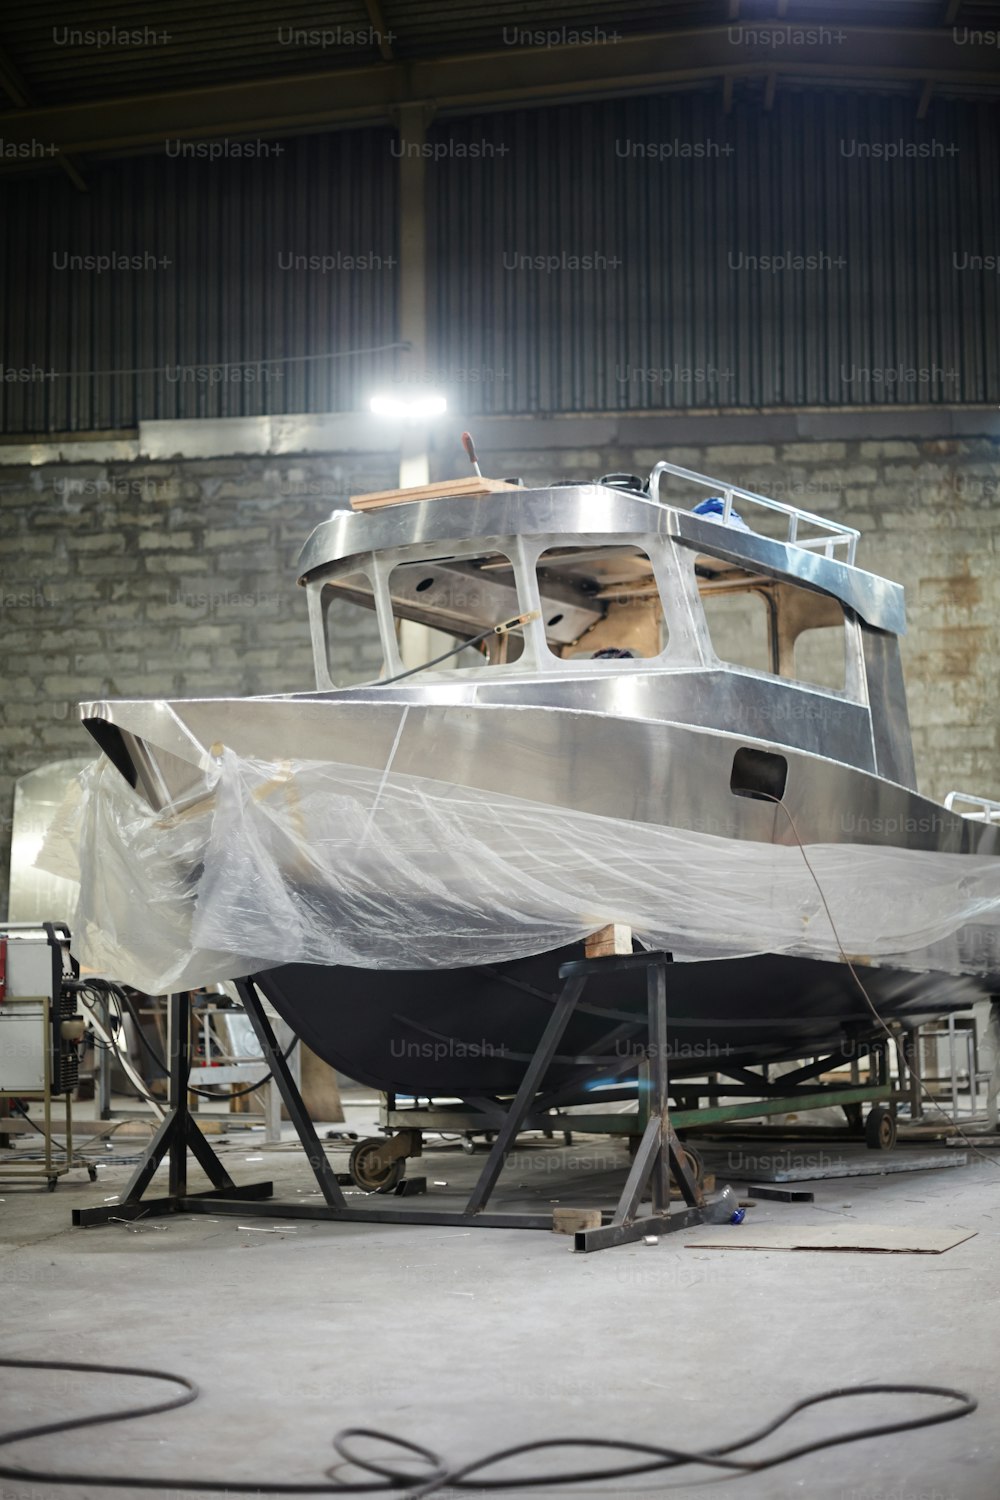 New empty metallic boat in hangar or shipyard built by modern engineers